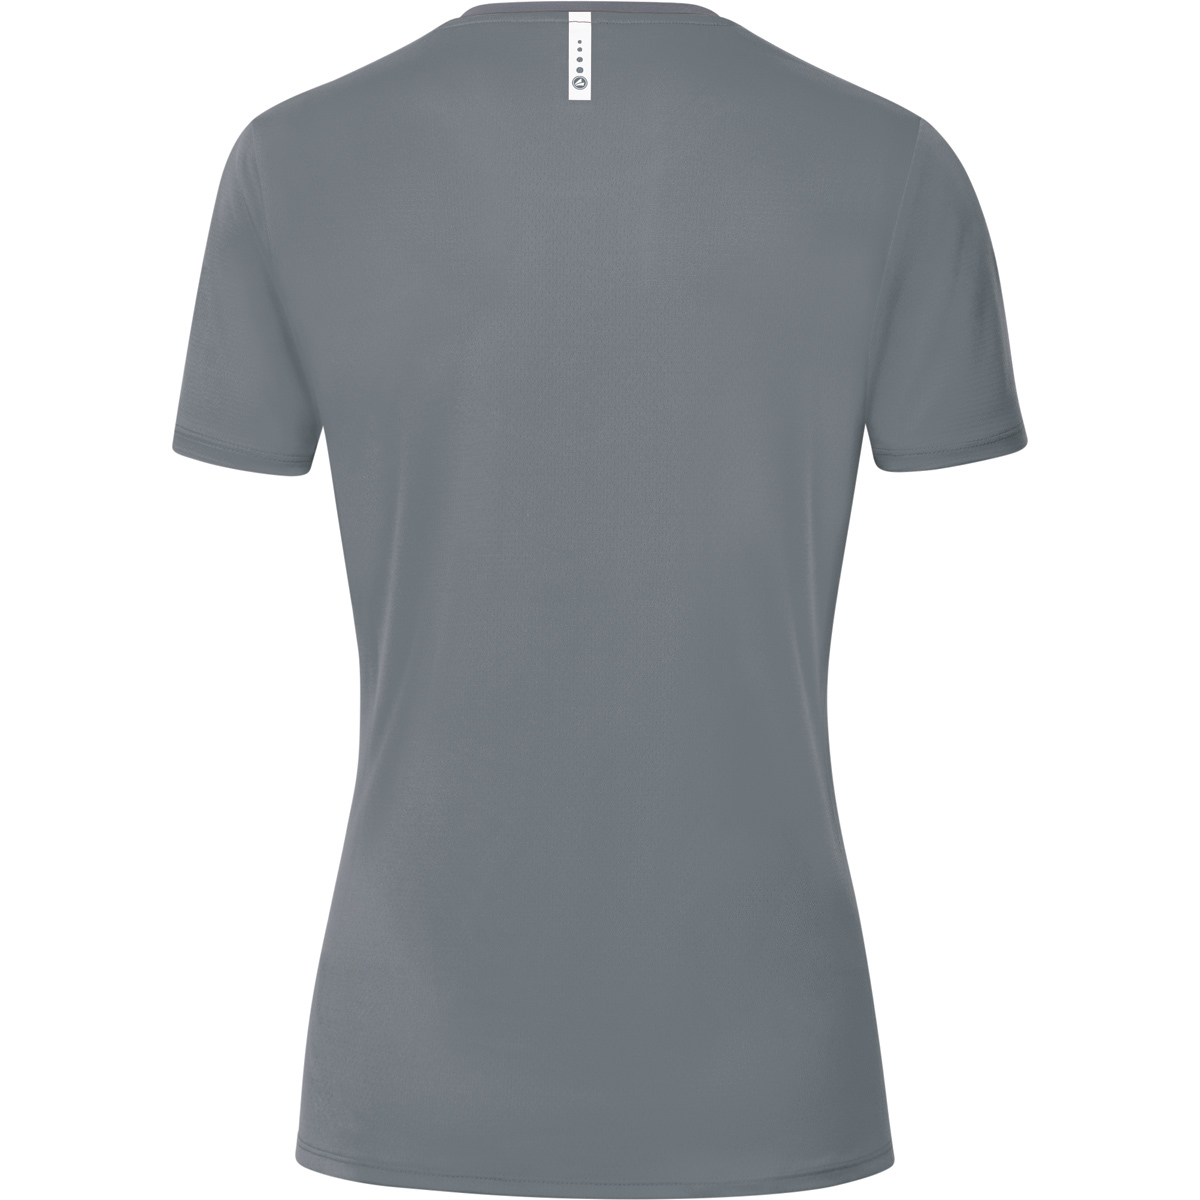 T-Shirt 2.0 steingrau/anthra light, Damen, JAKO 36, Gr. 6120 Champ